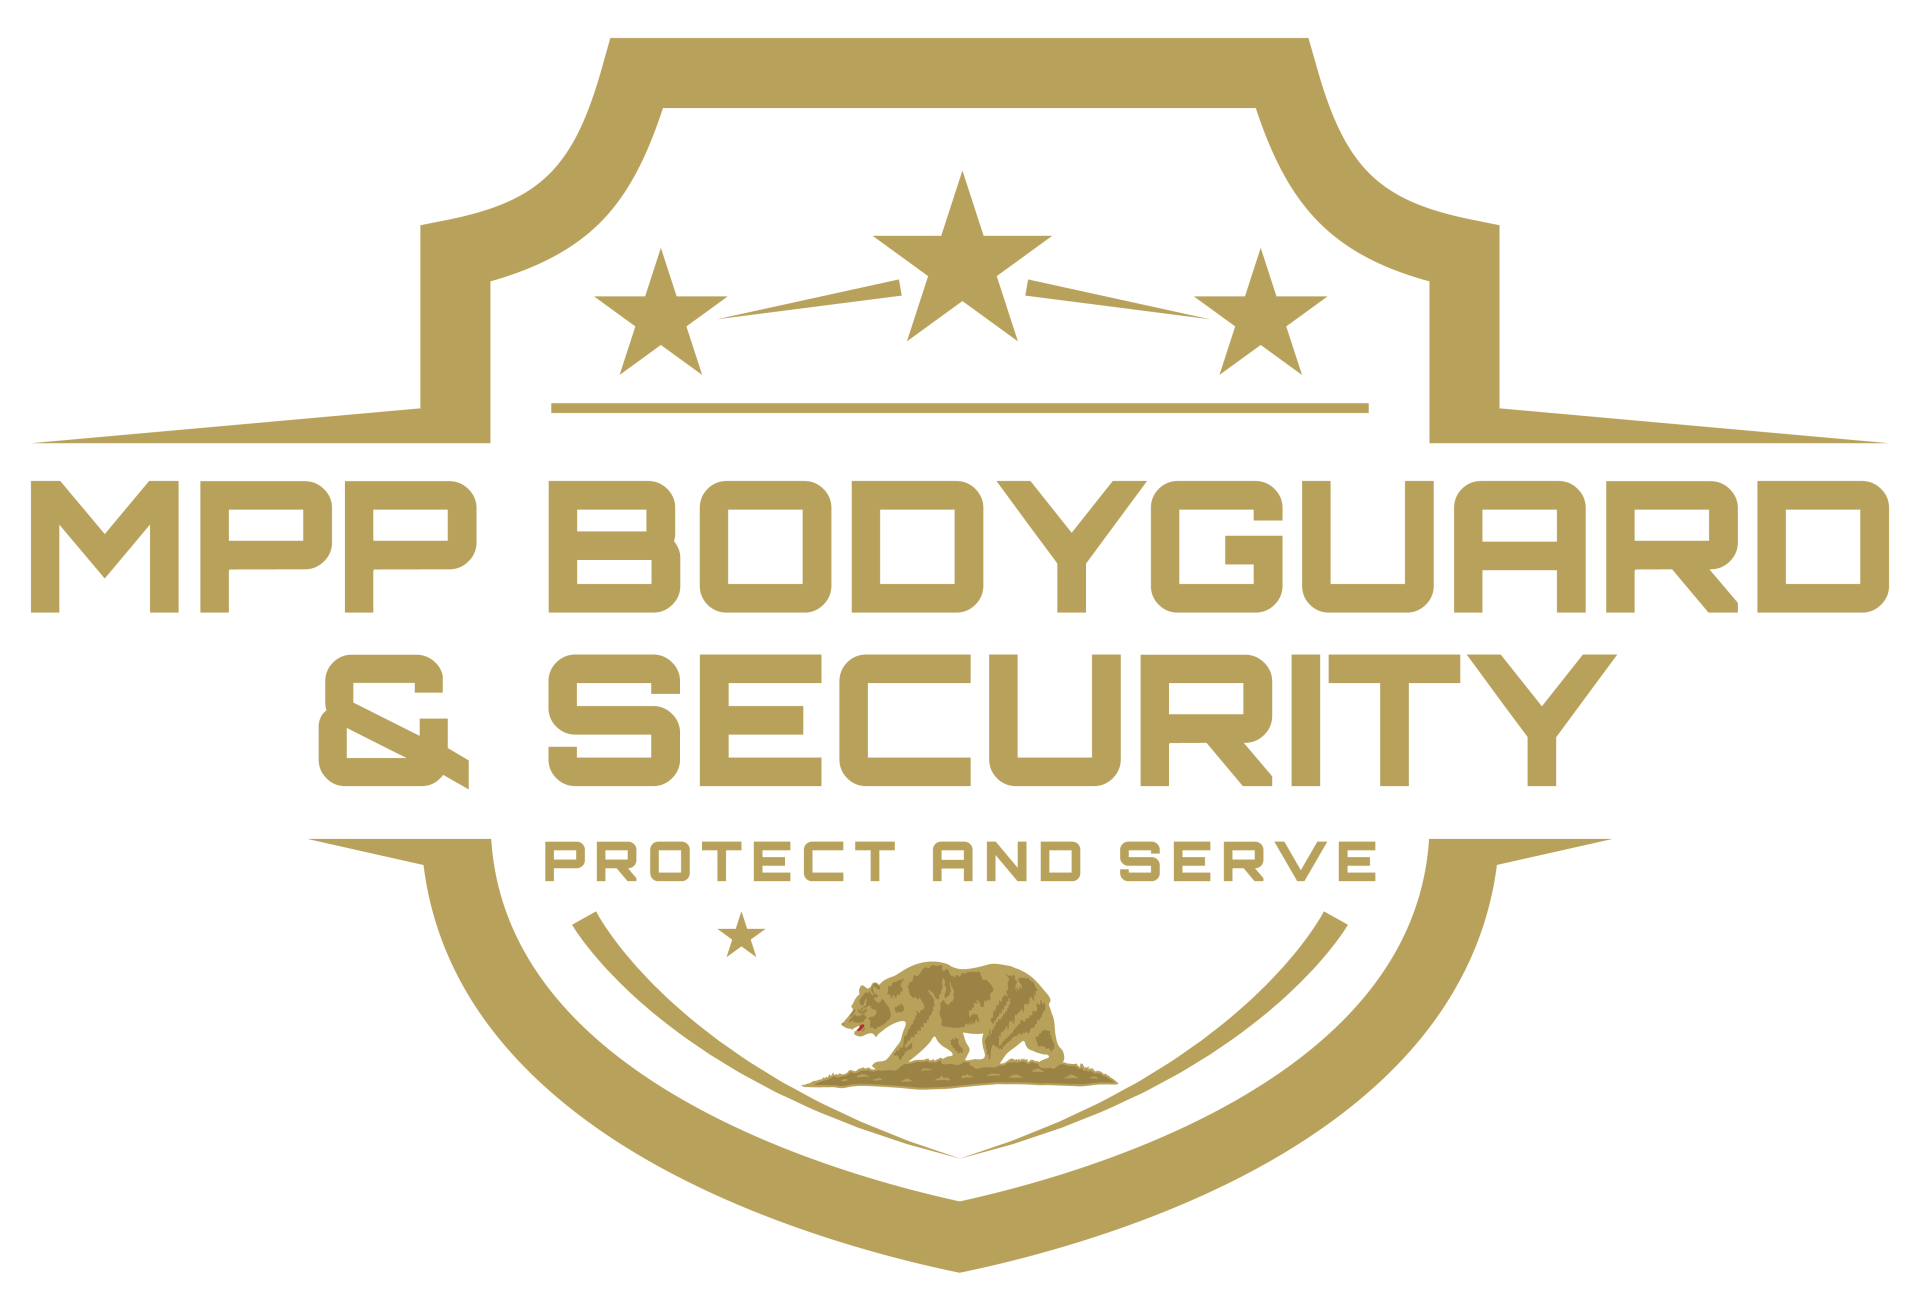 Professional Security Guards San Diego Ca Mpp Bodyguard Security